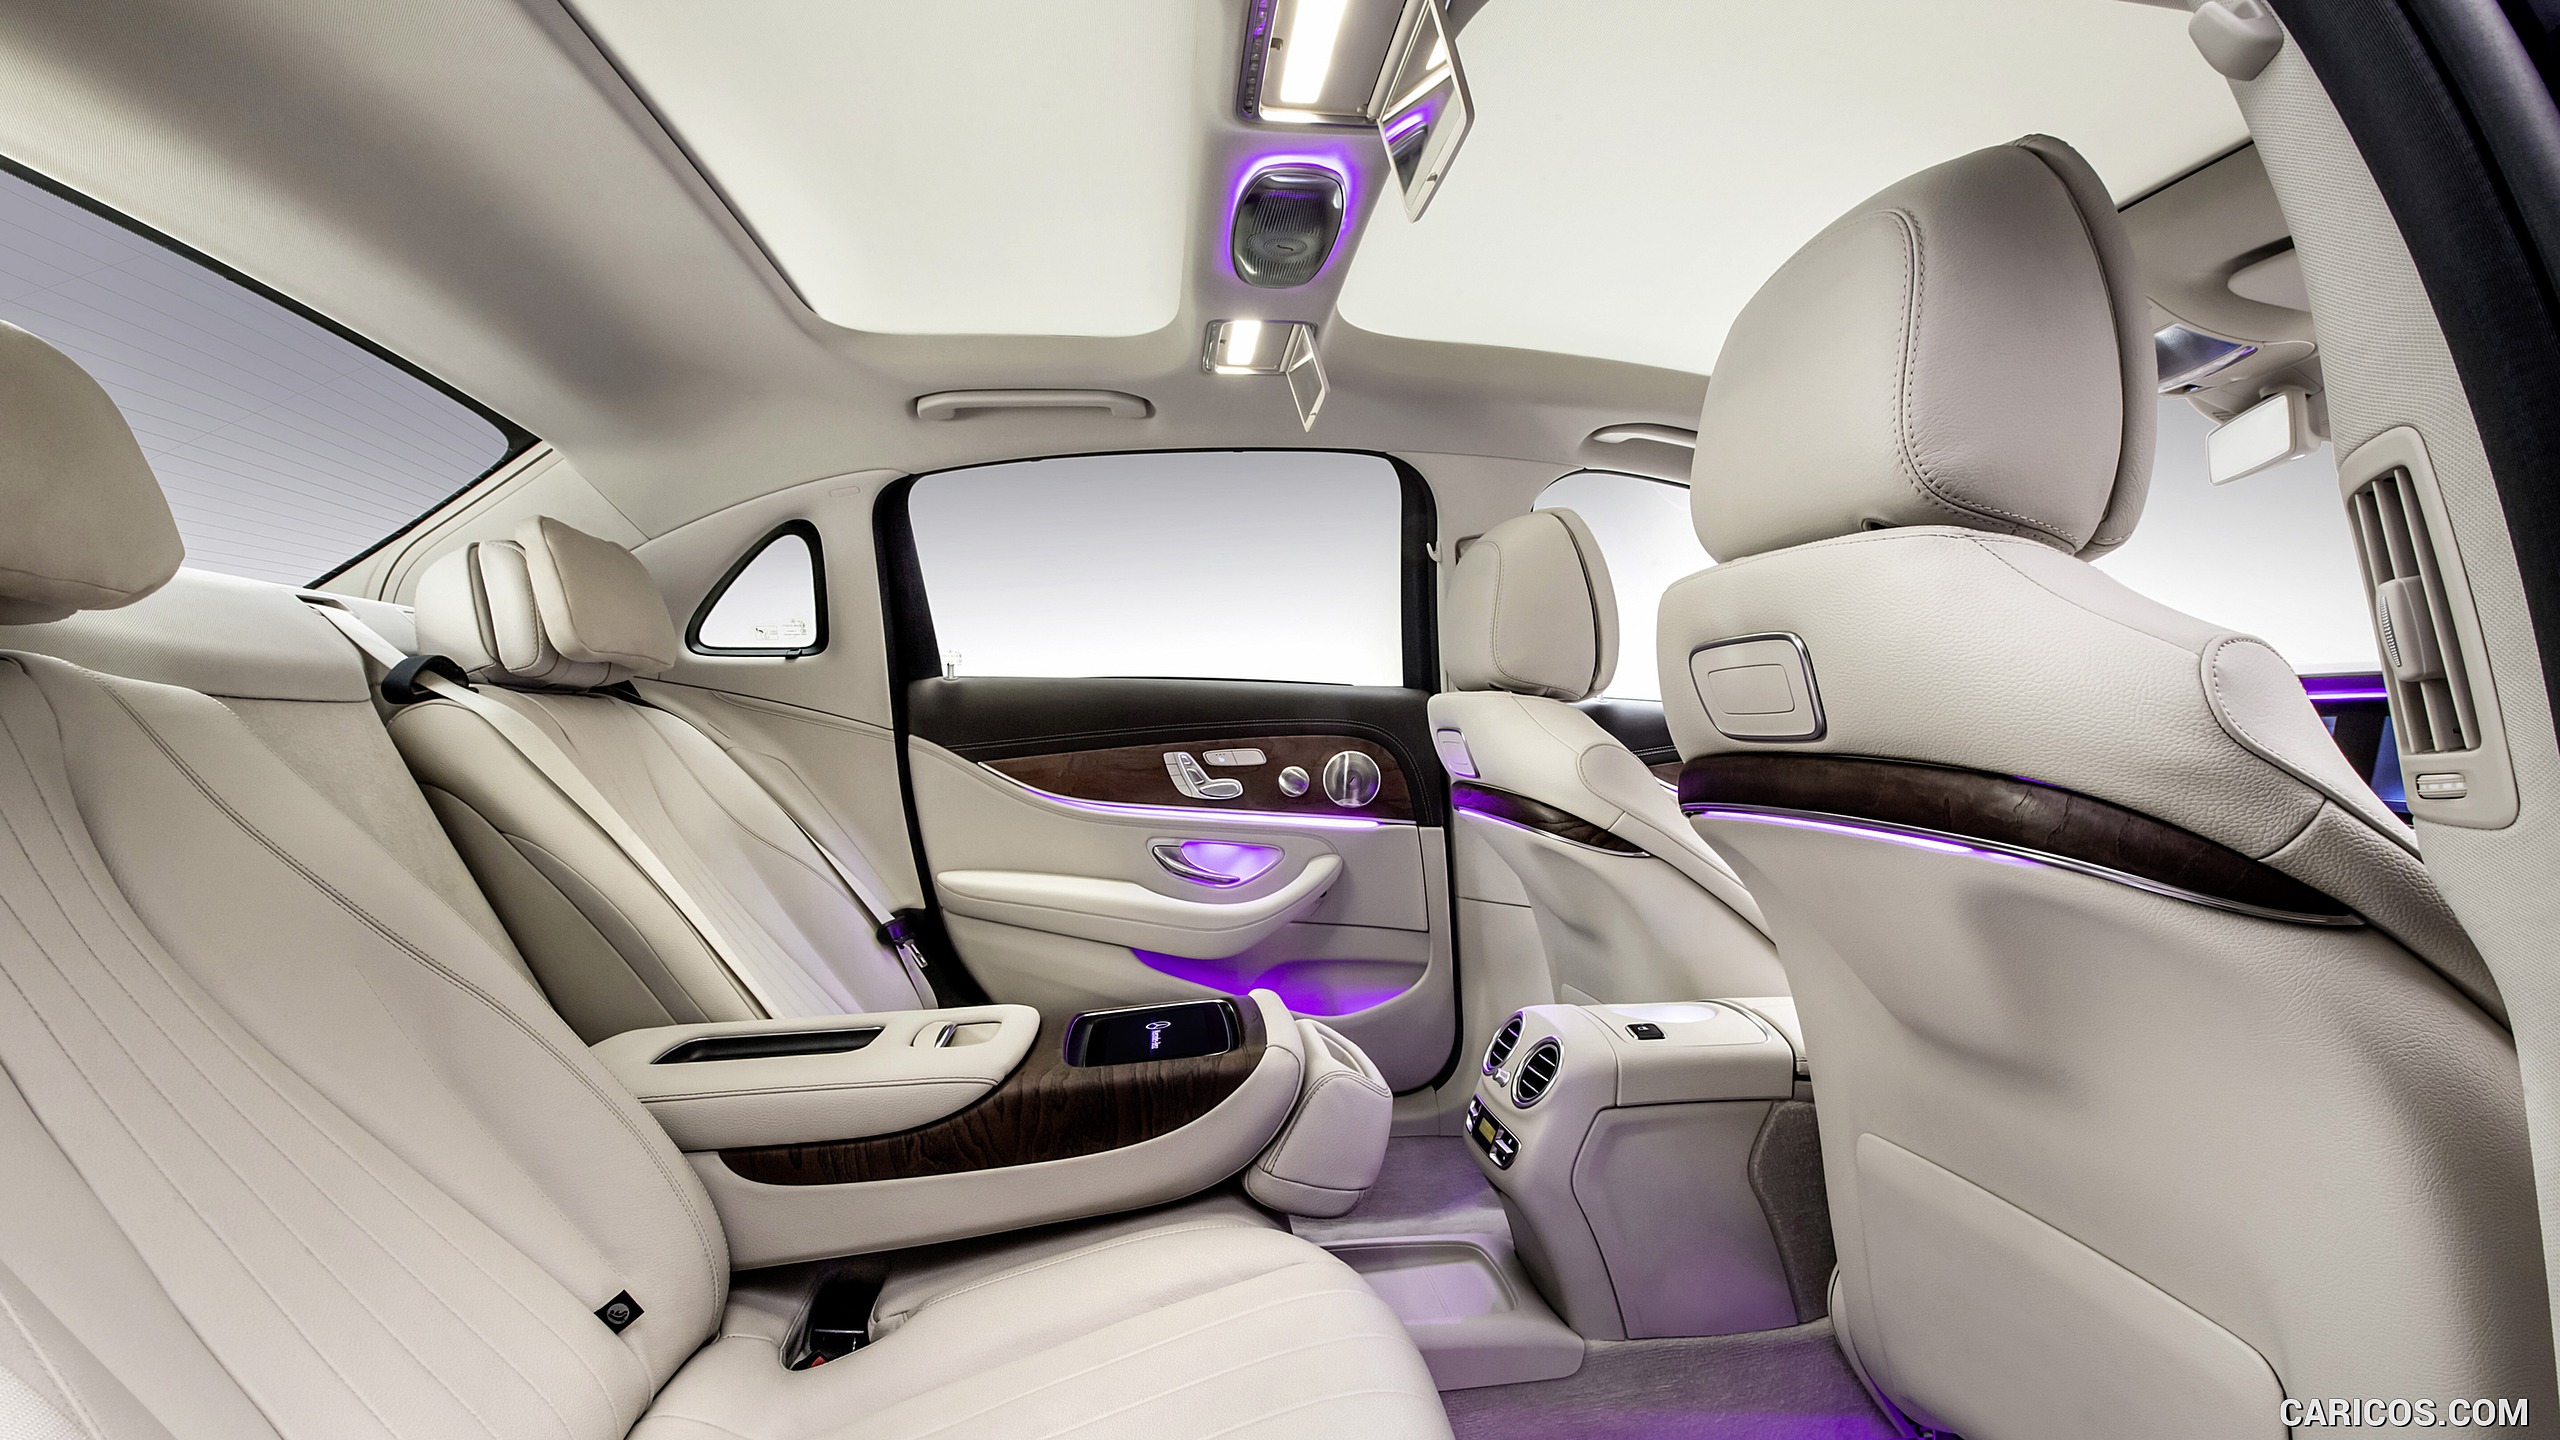 2017 Mercedes-Benz E-Class LWB - Interior, Rear Seats, #14 of 14